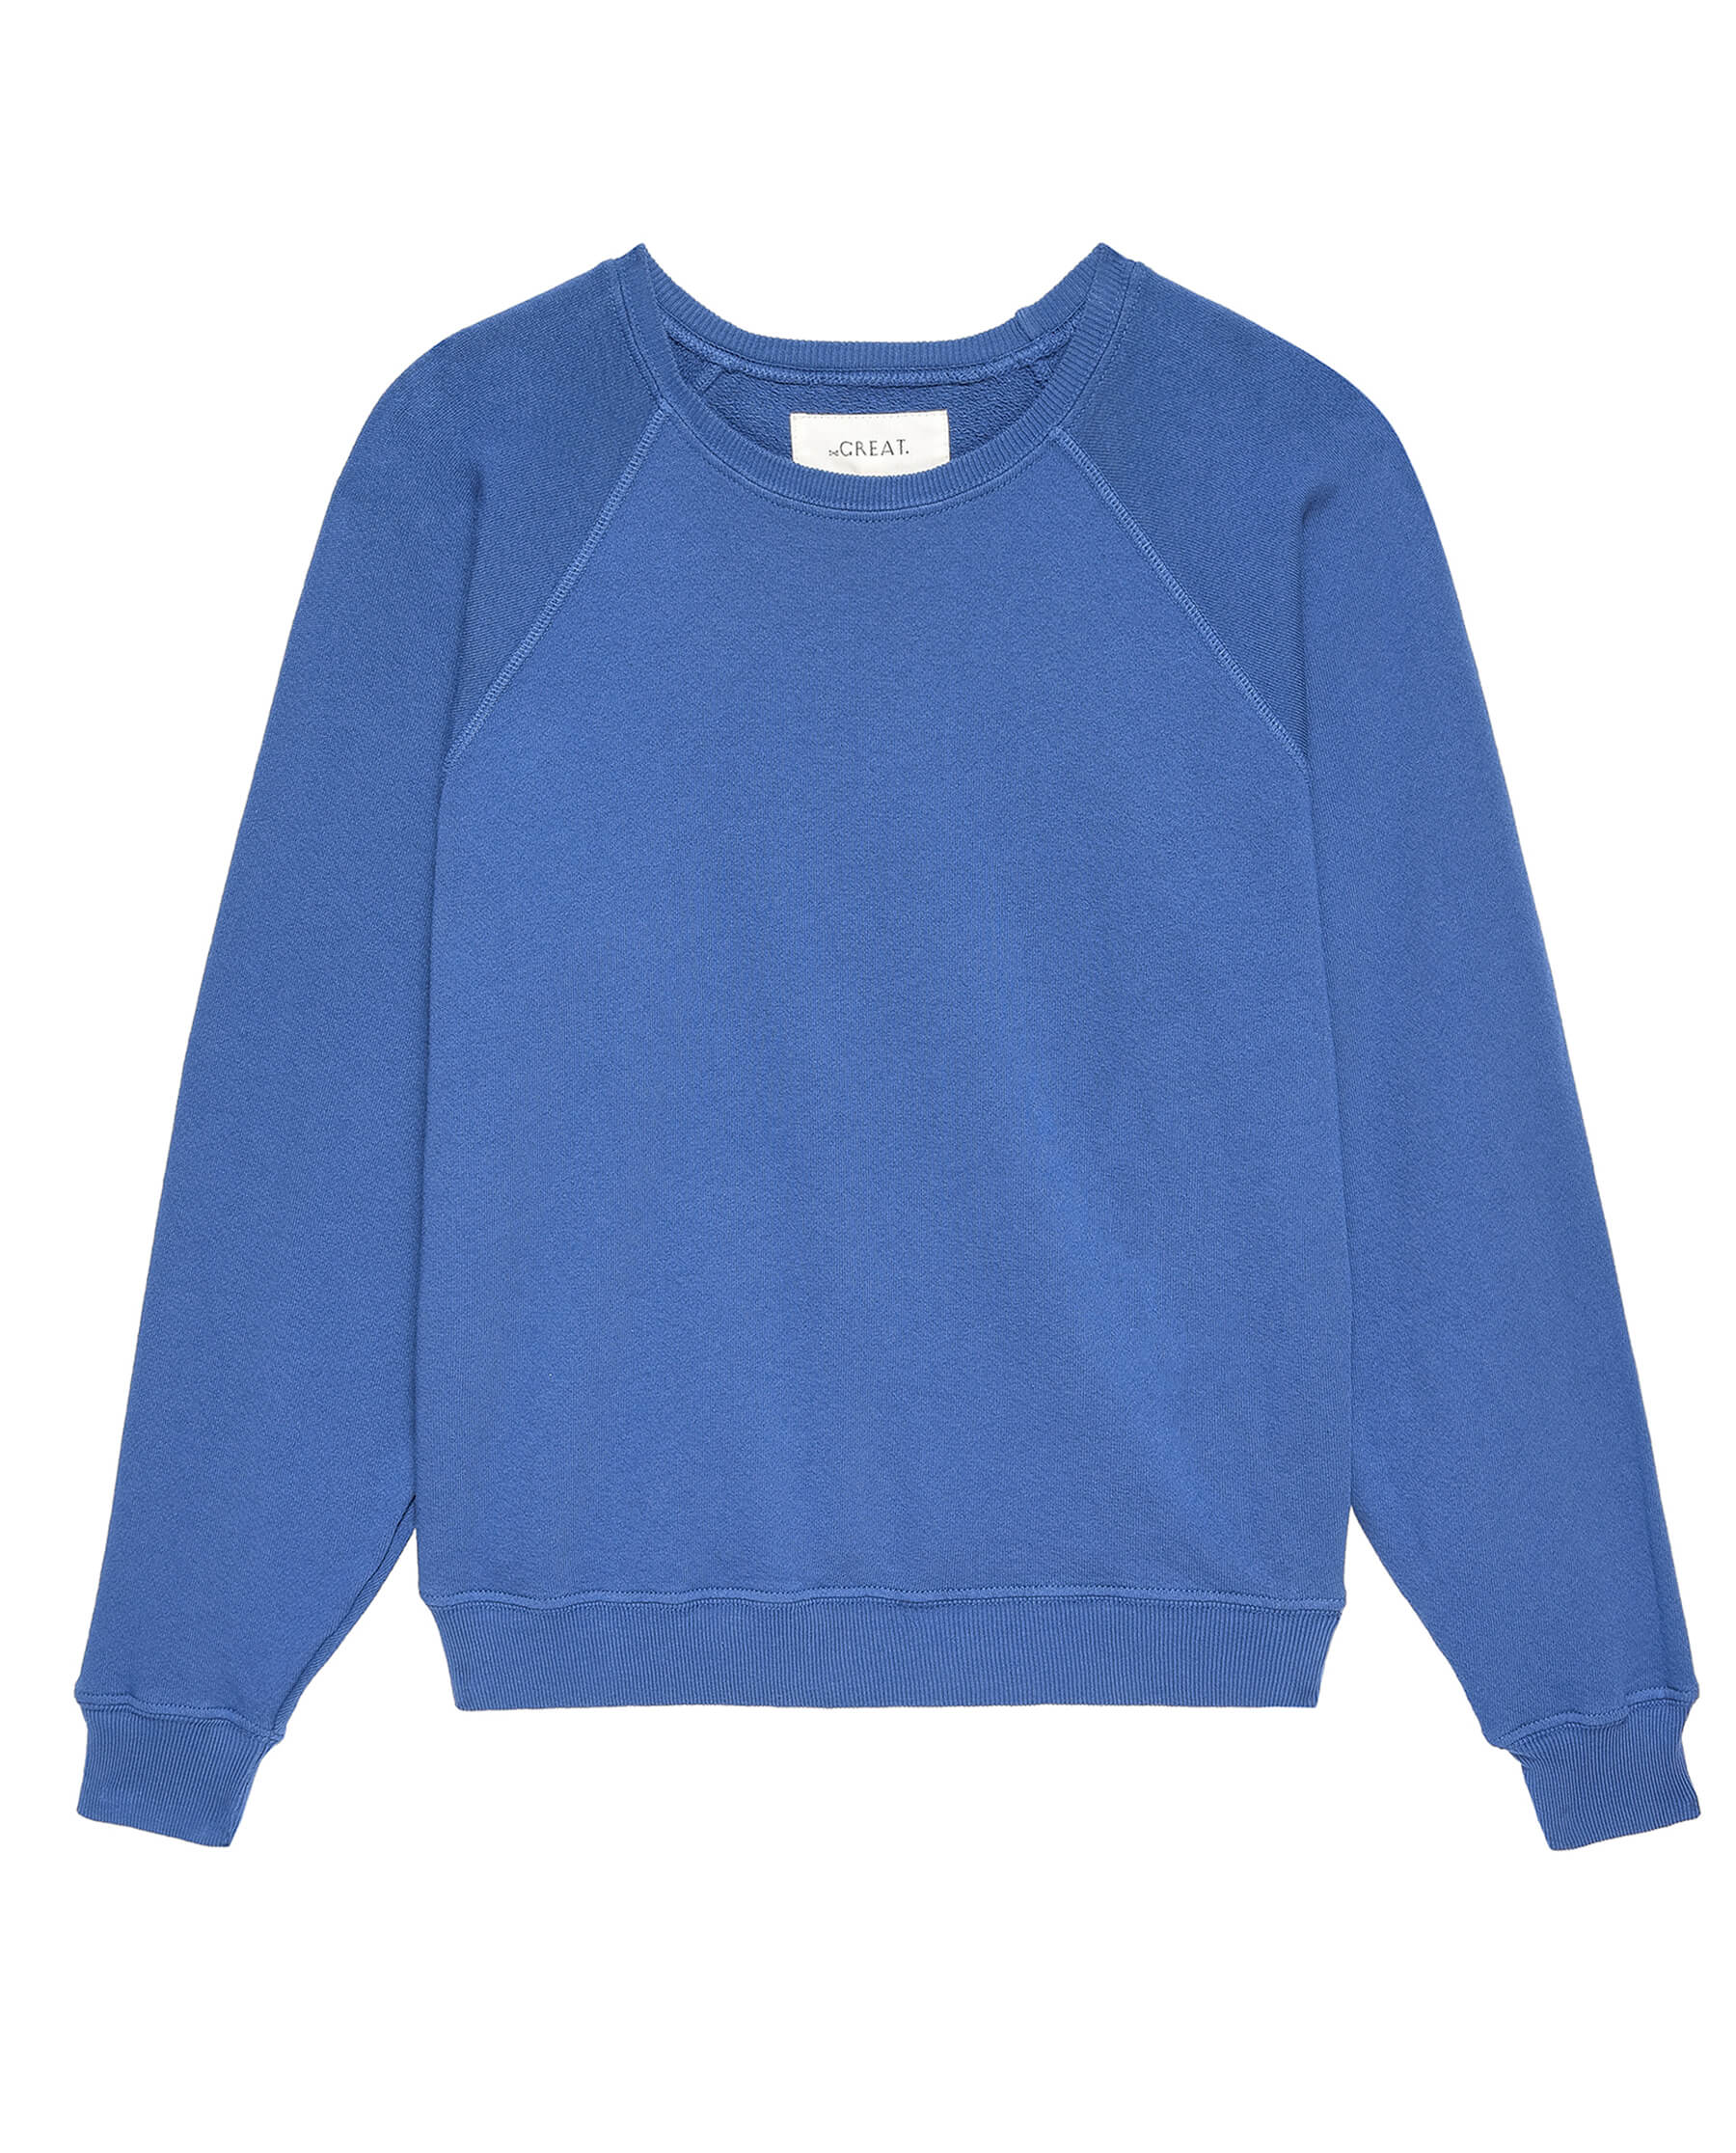 The Shrunken Sweatshirt. Solid -- Glacier Blue